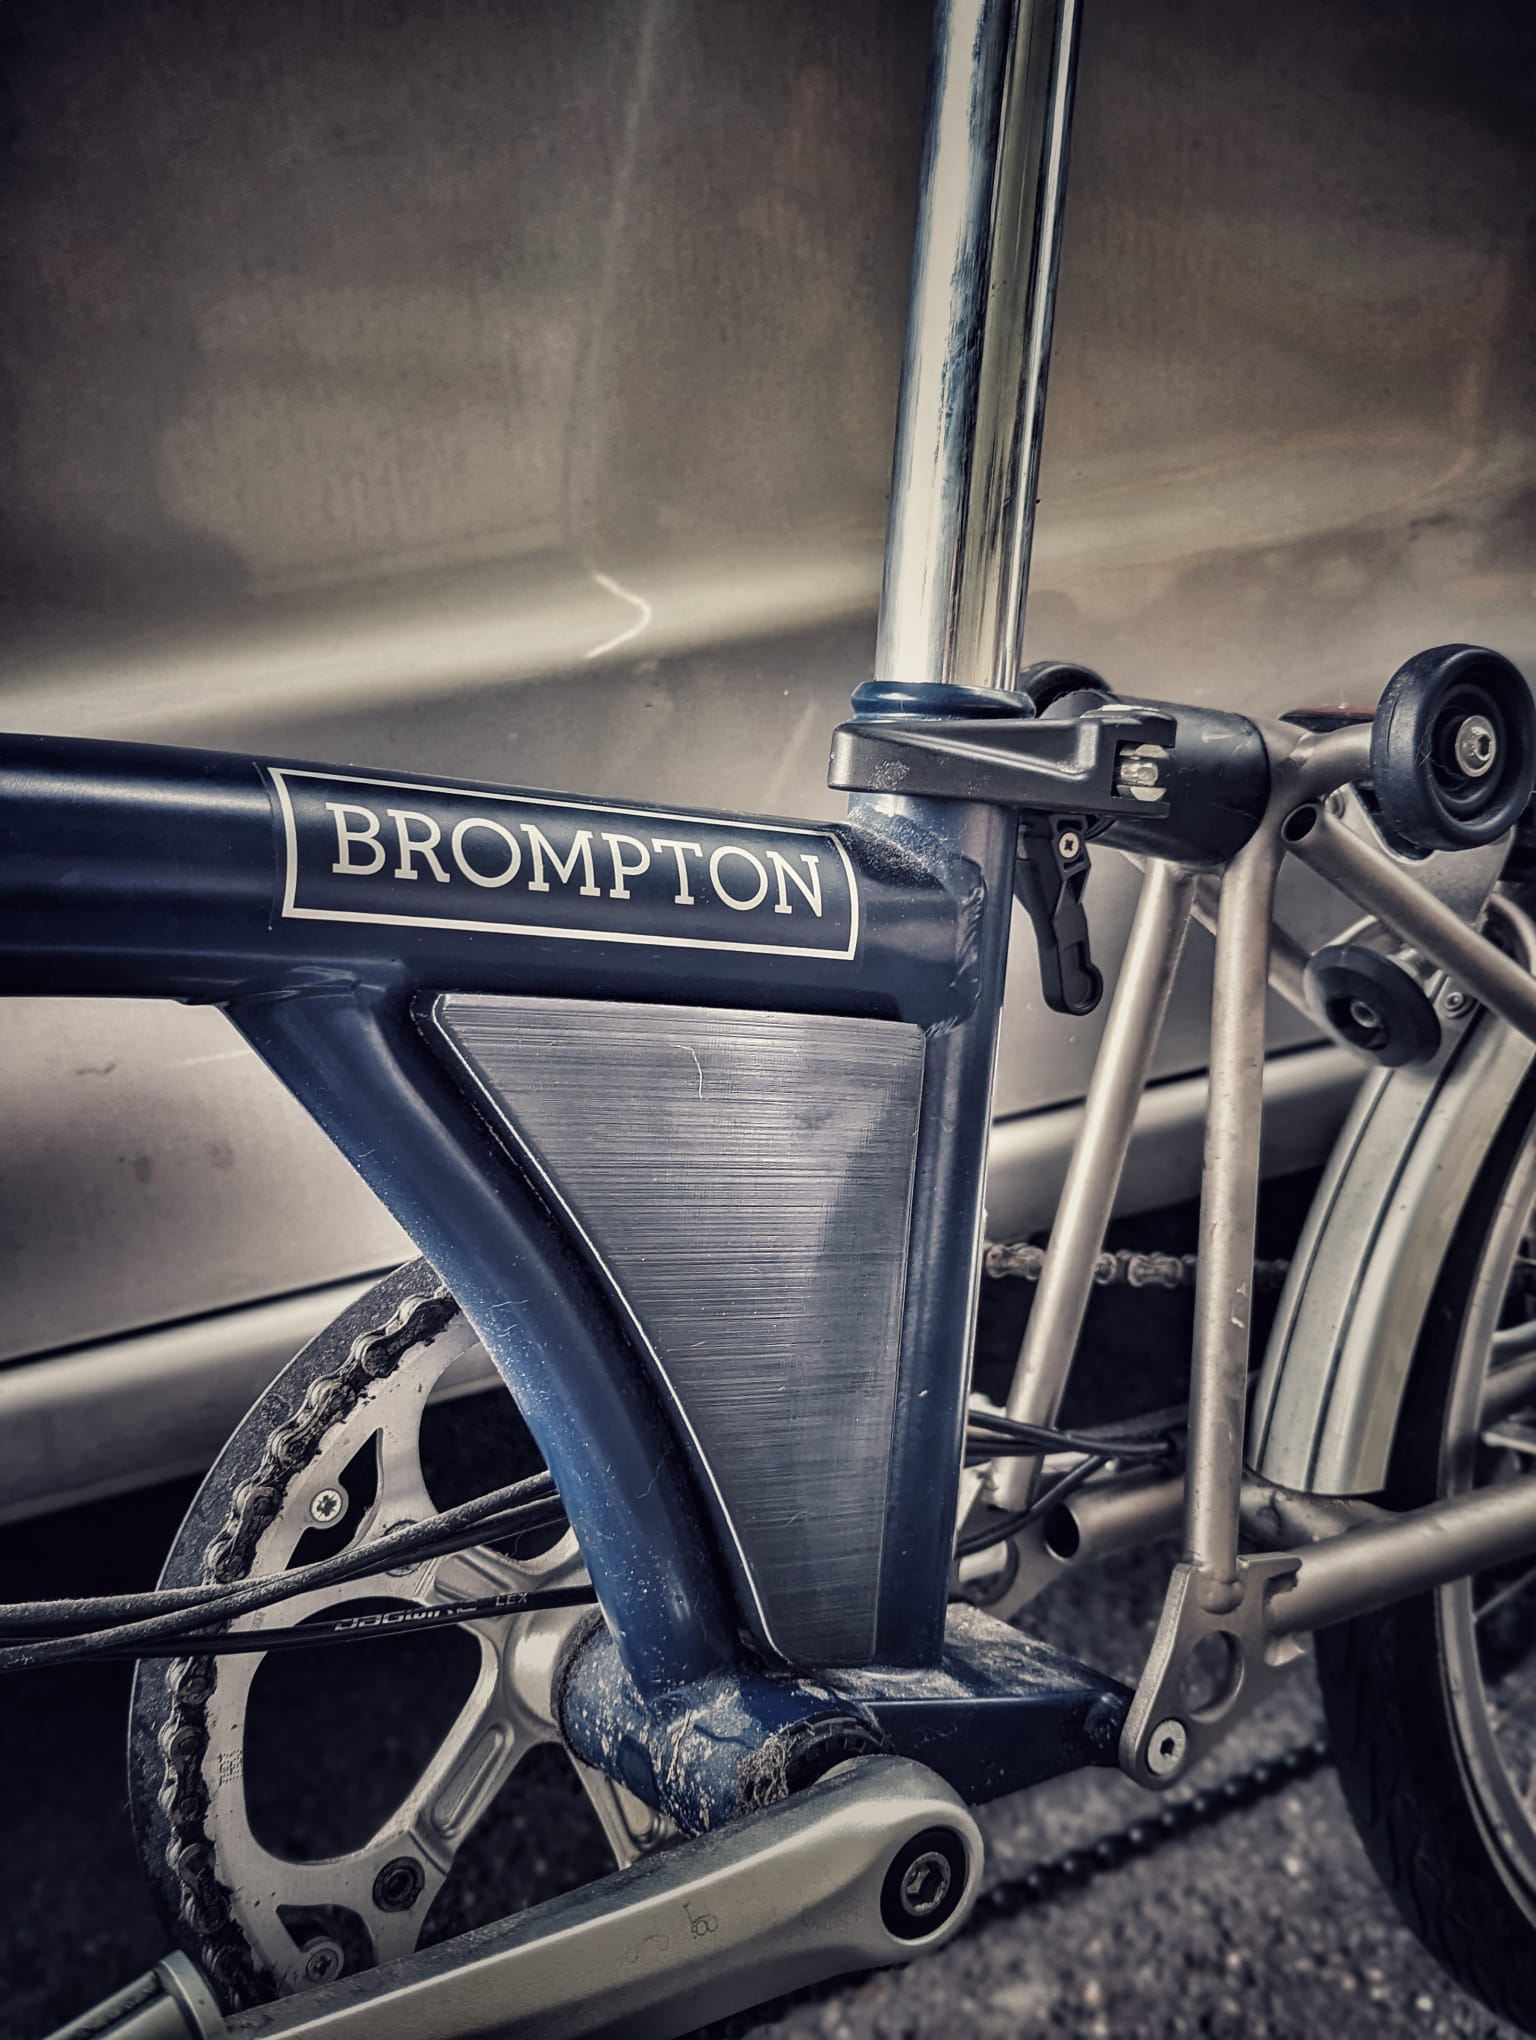 Aero Triangle Frame Bag for Brompton bike